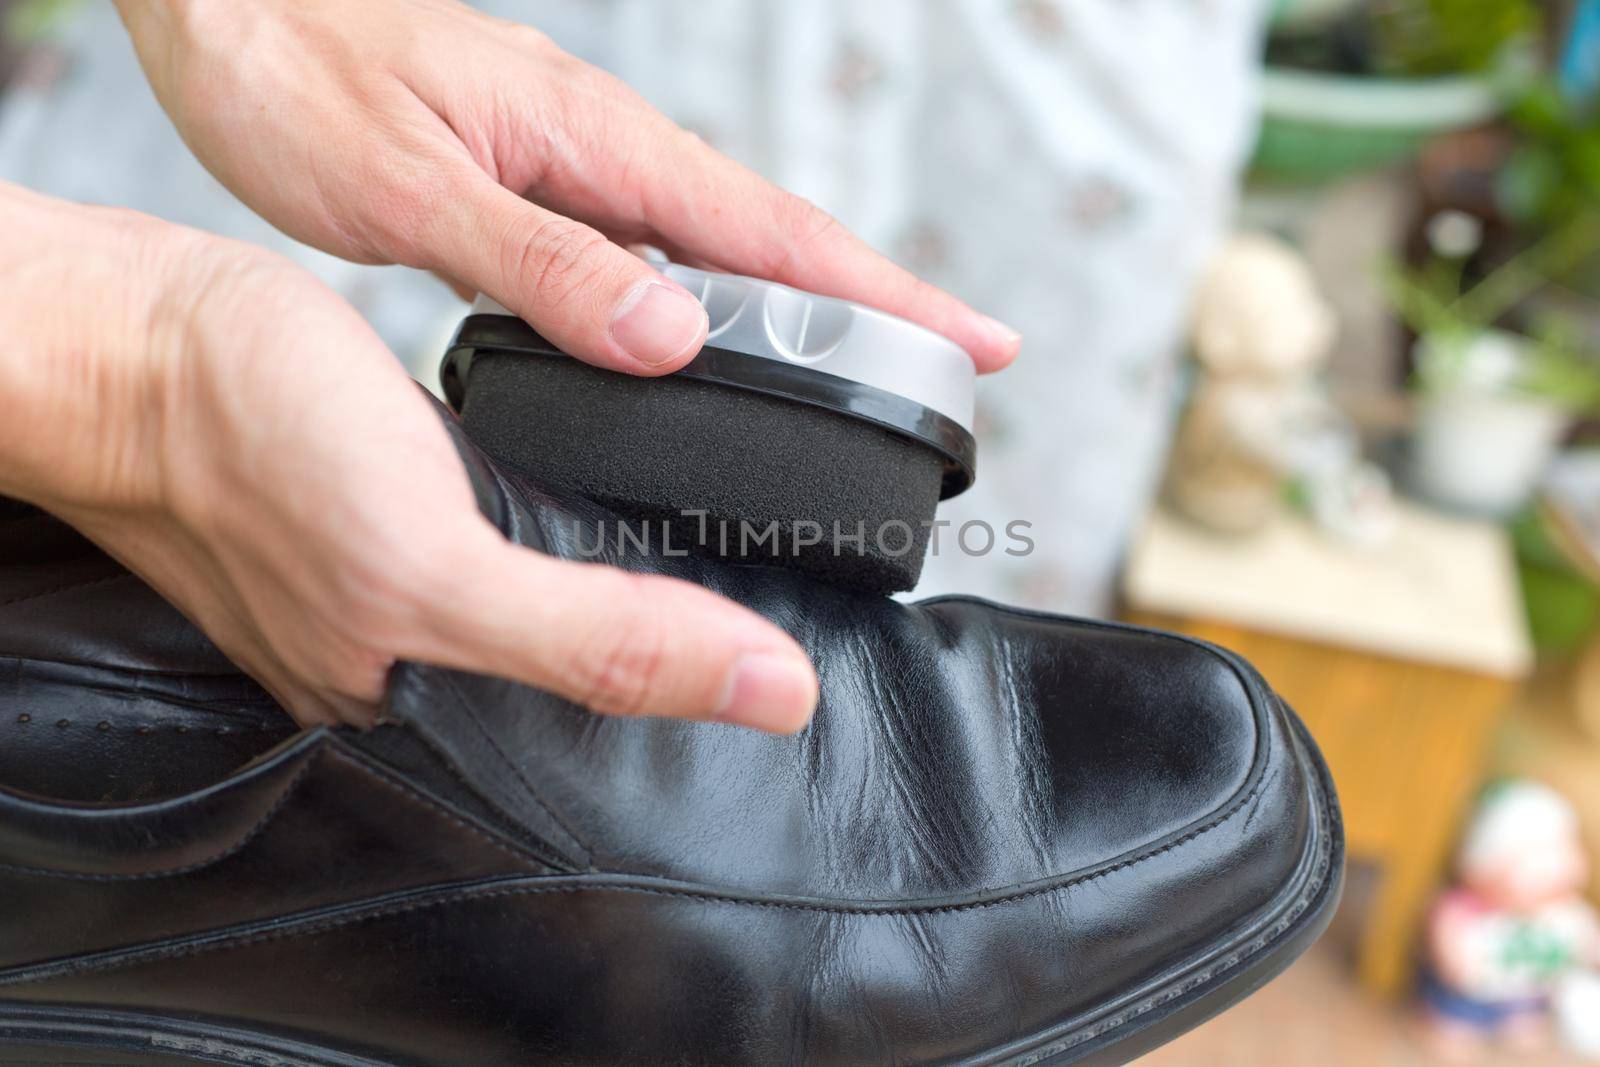 Hands polish leather black shoes.